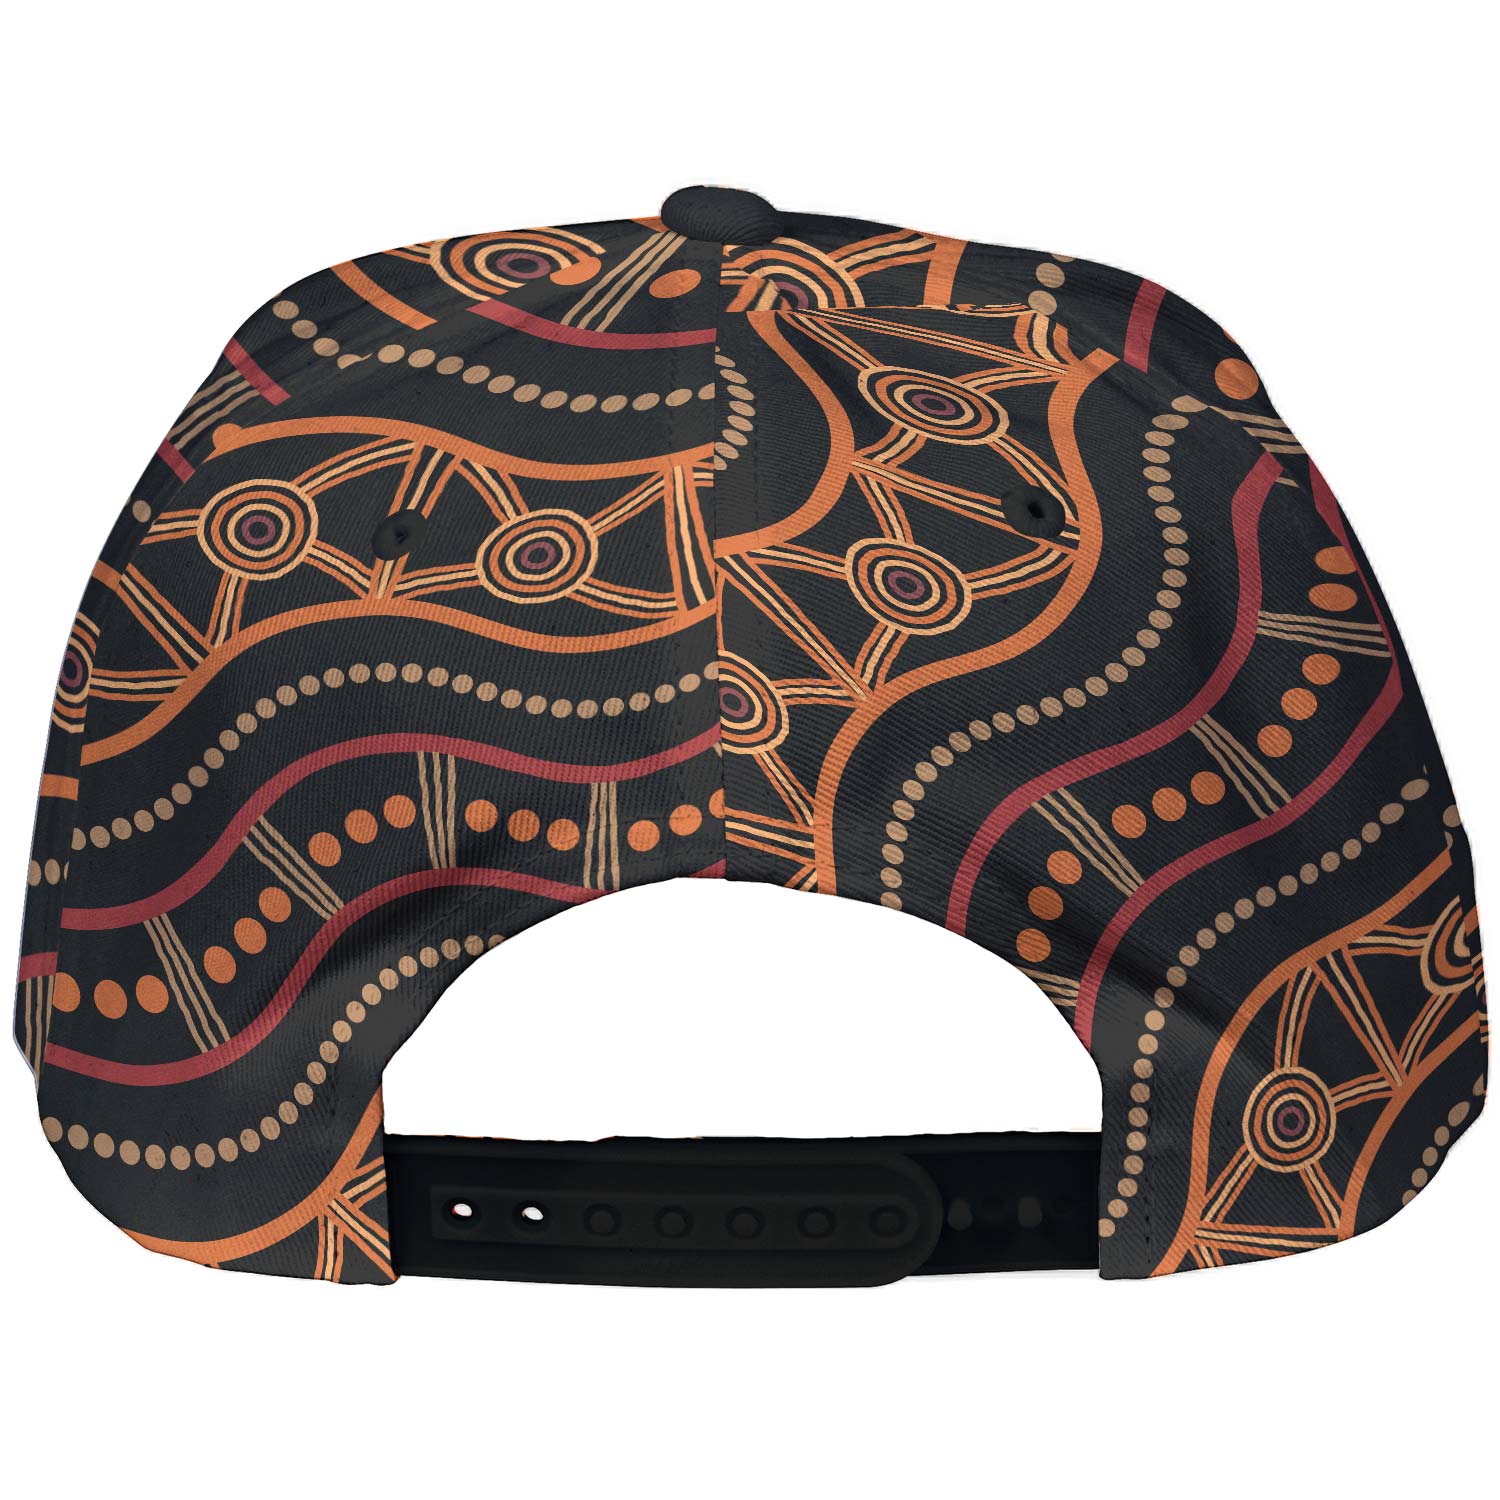 Australia Naidoc Week Aboriginal Cap Naidoc Heal Country Aboriginal Patterns Dot Art Patterns Cap